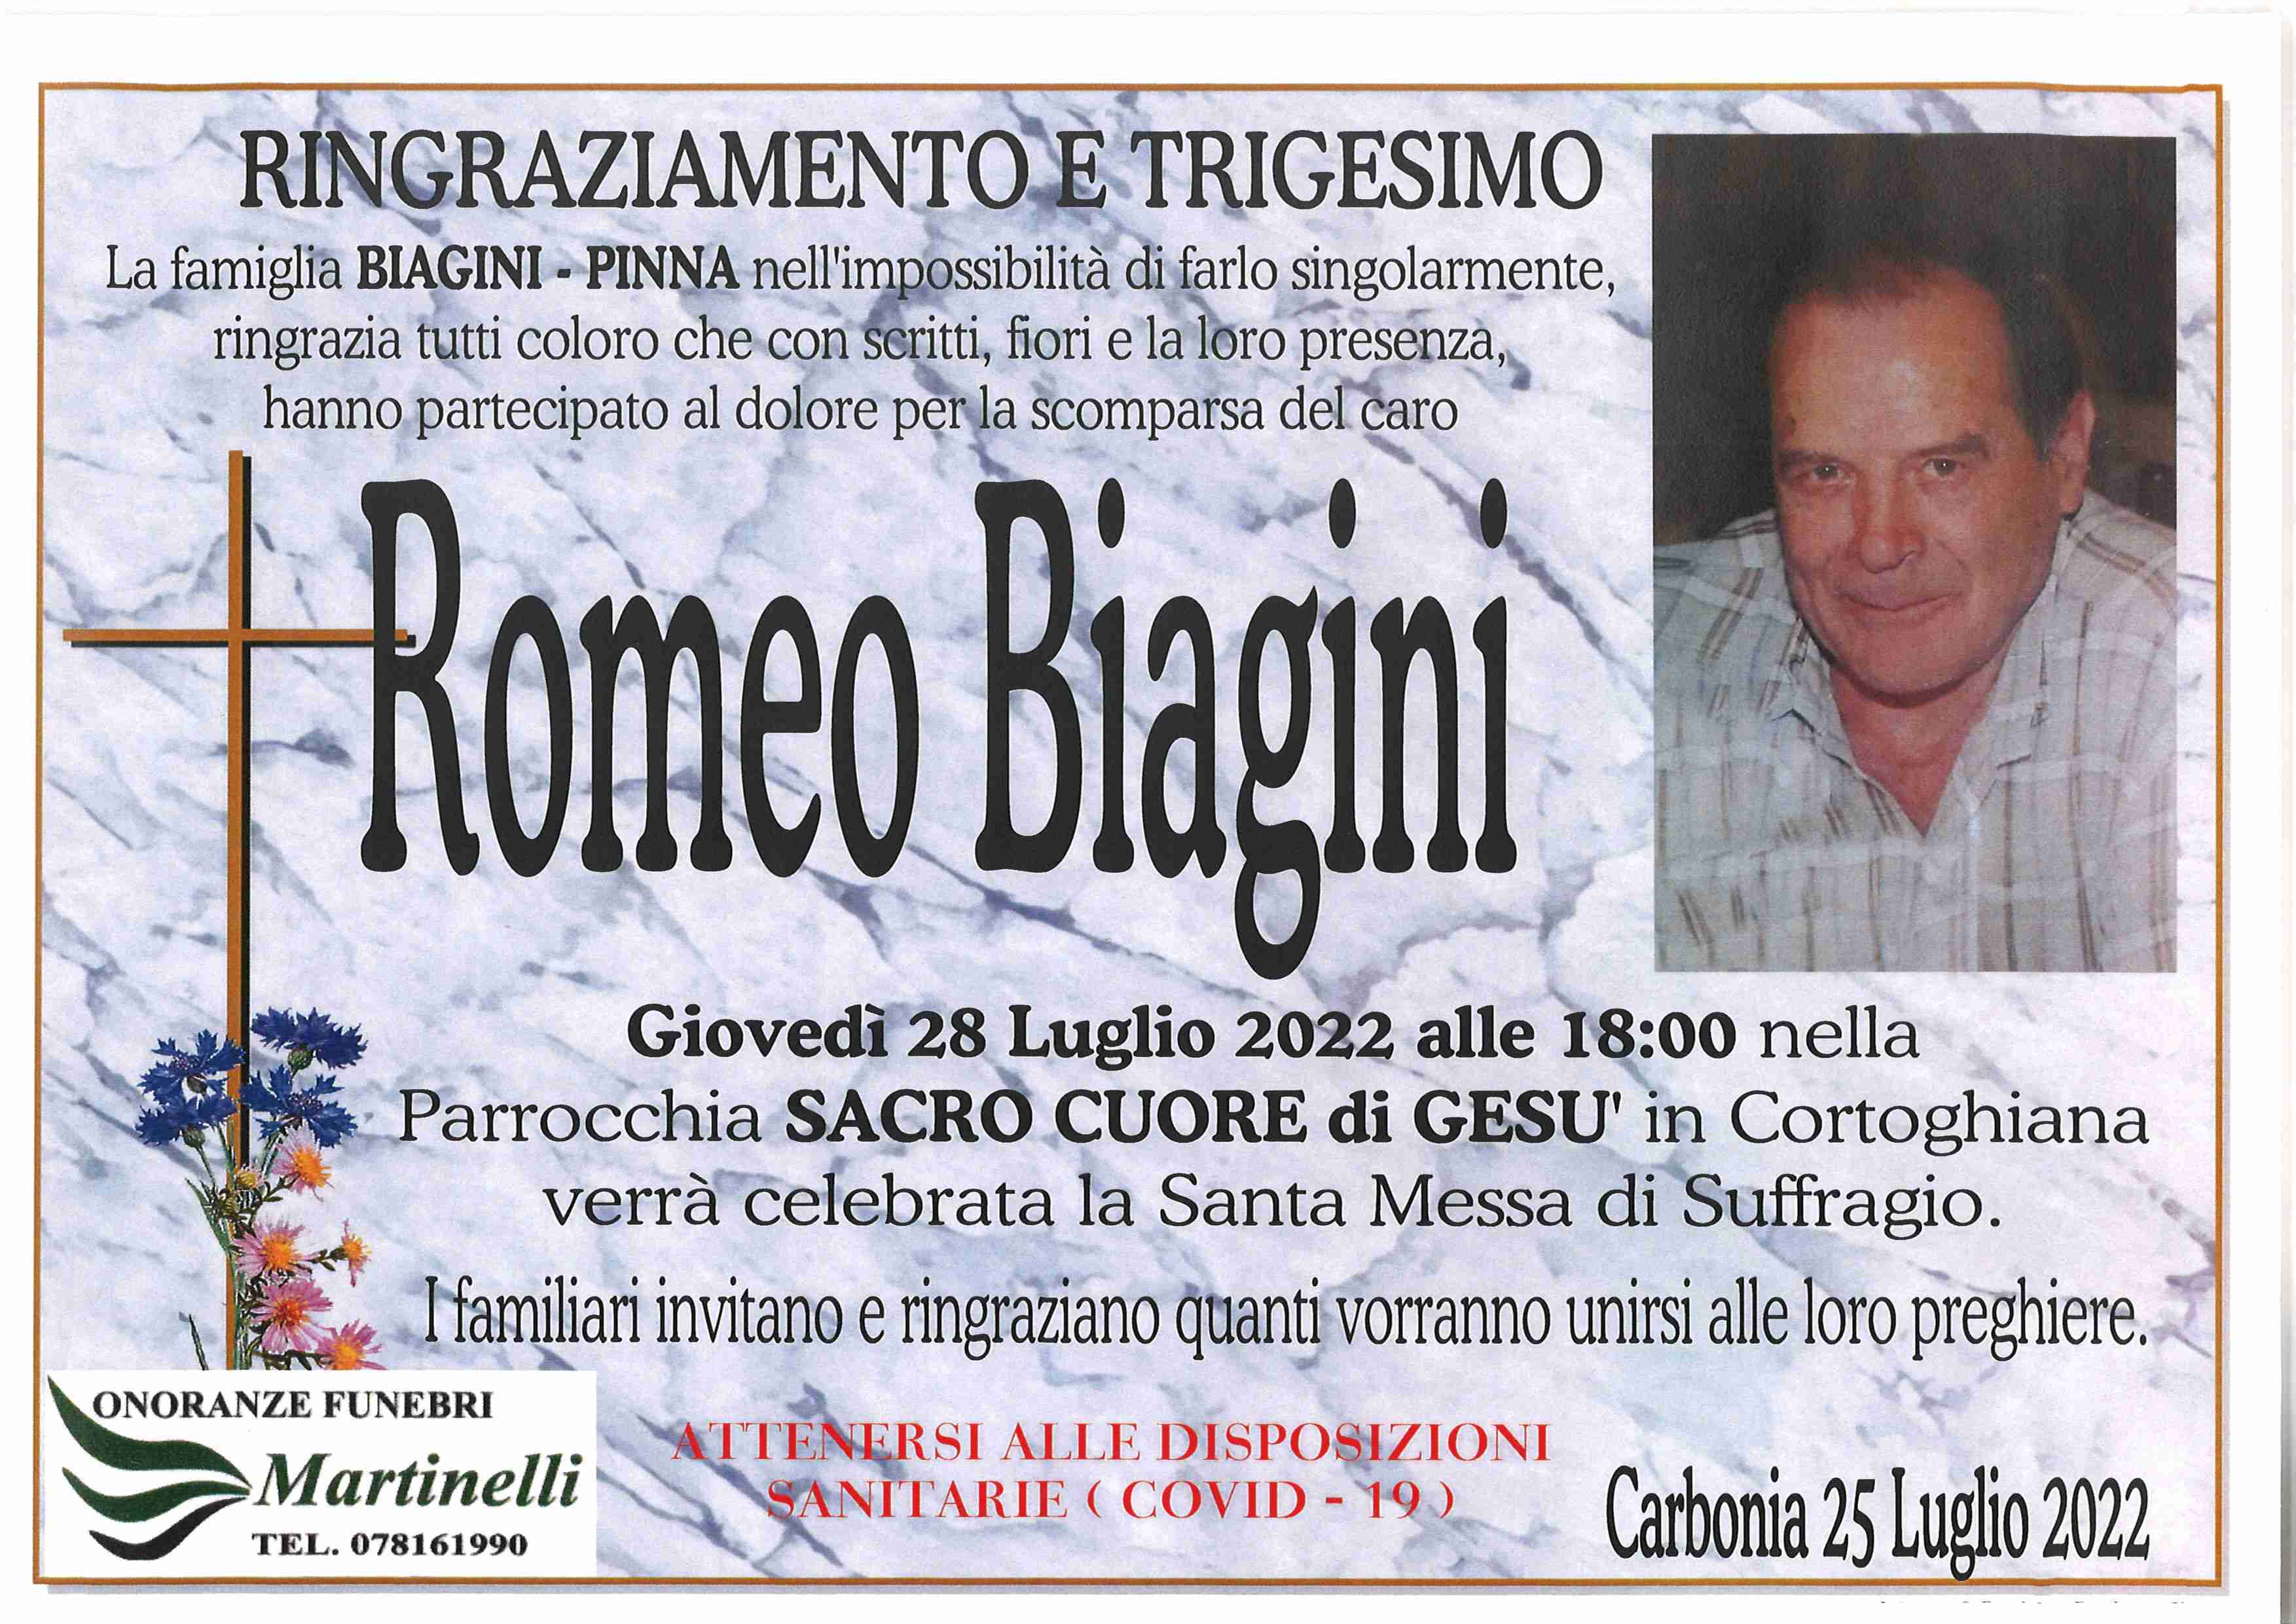 Romeo Biagini